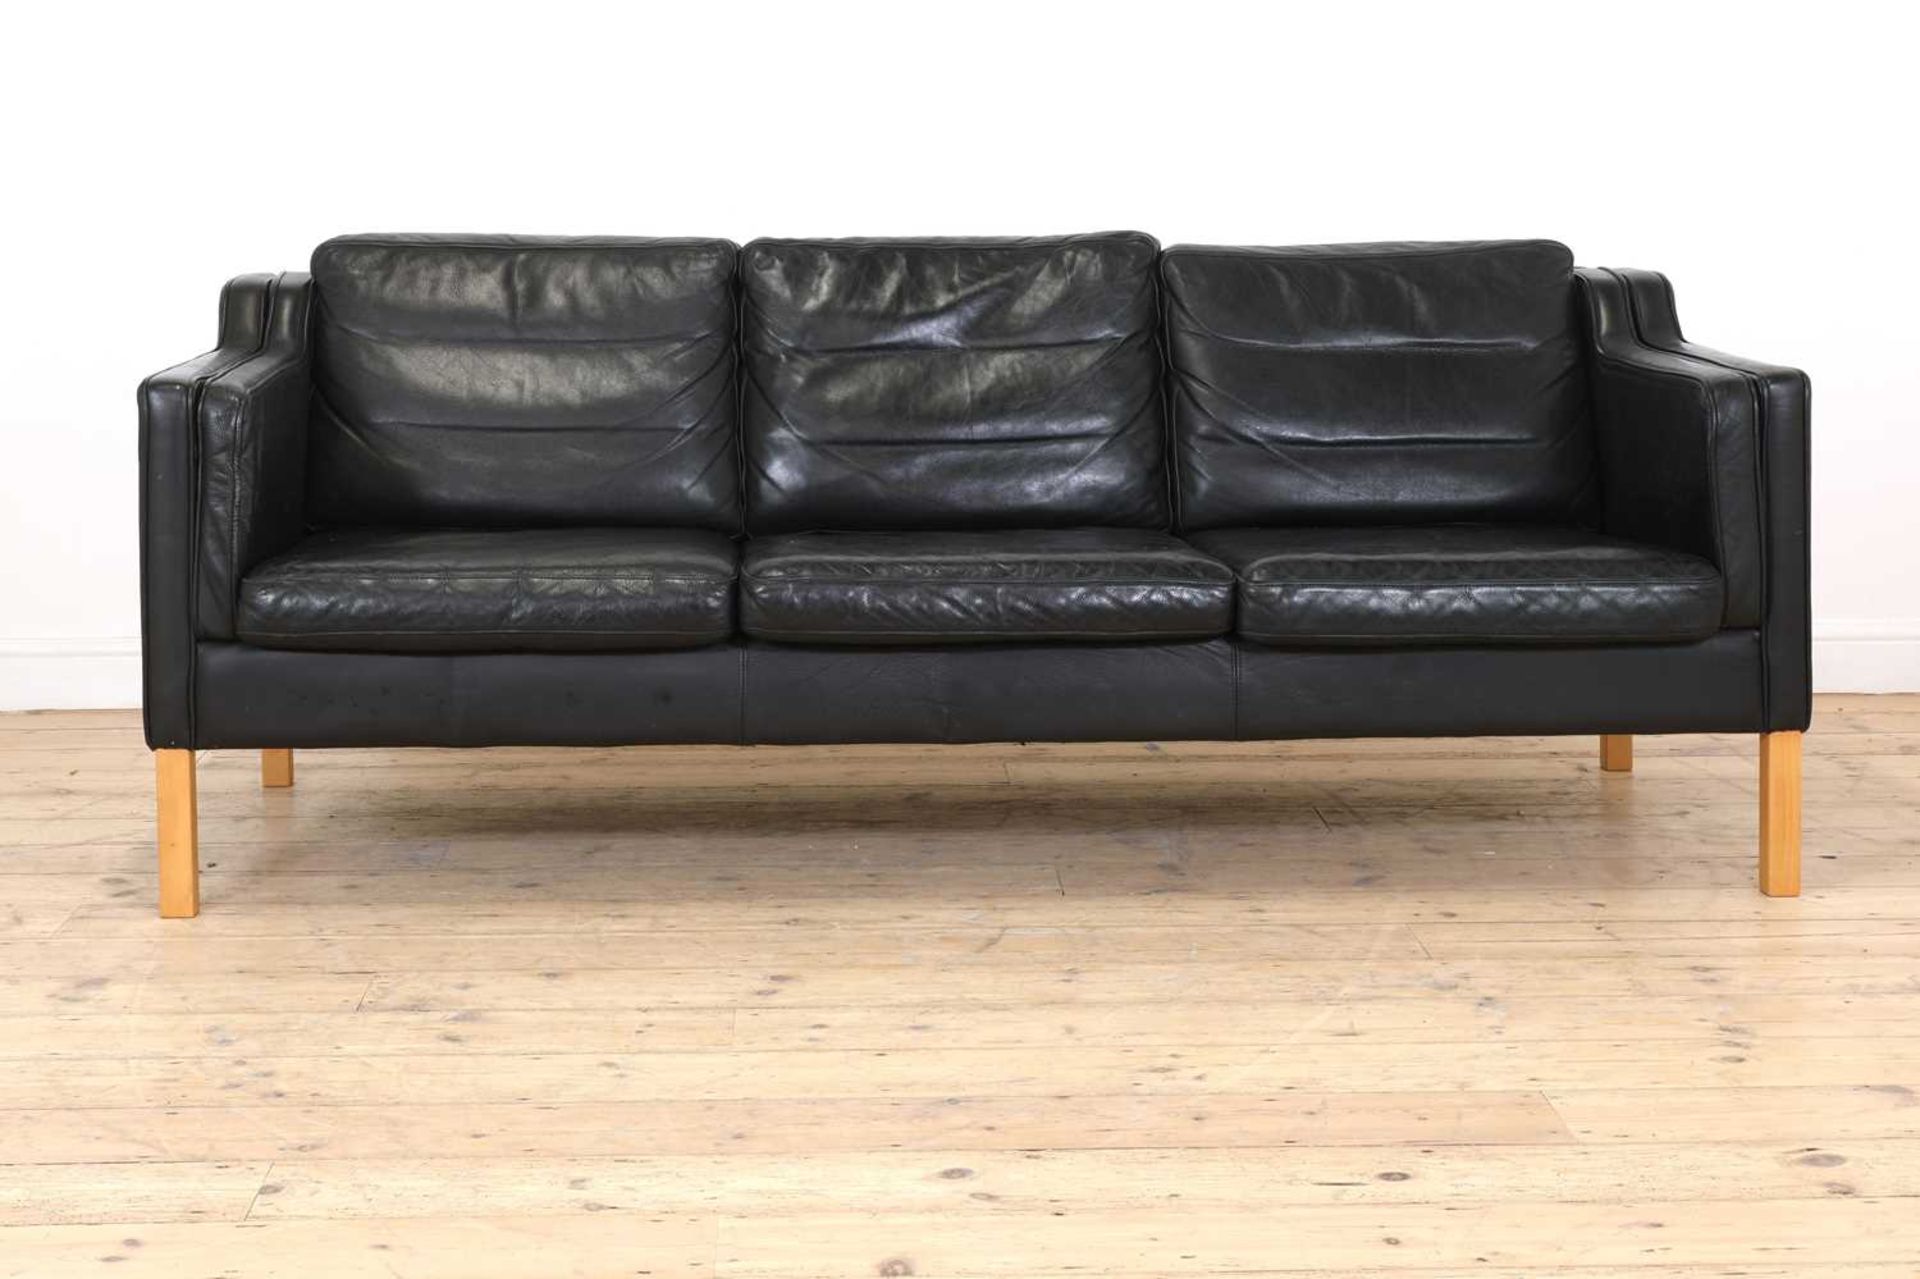 A Danish black leather three-seater settee,